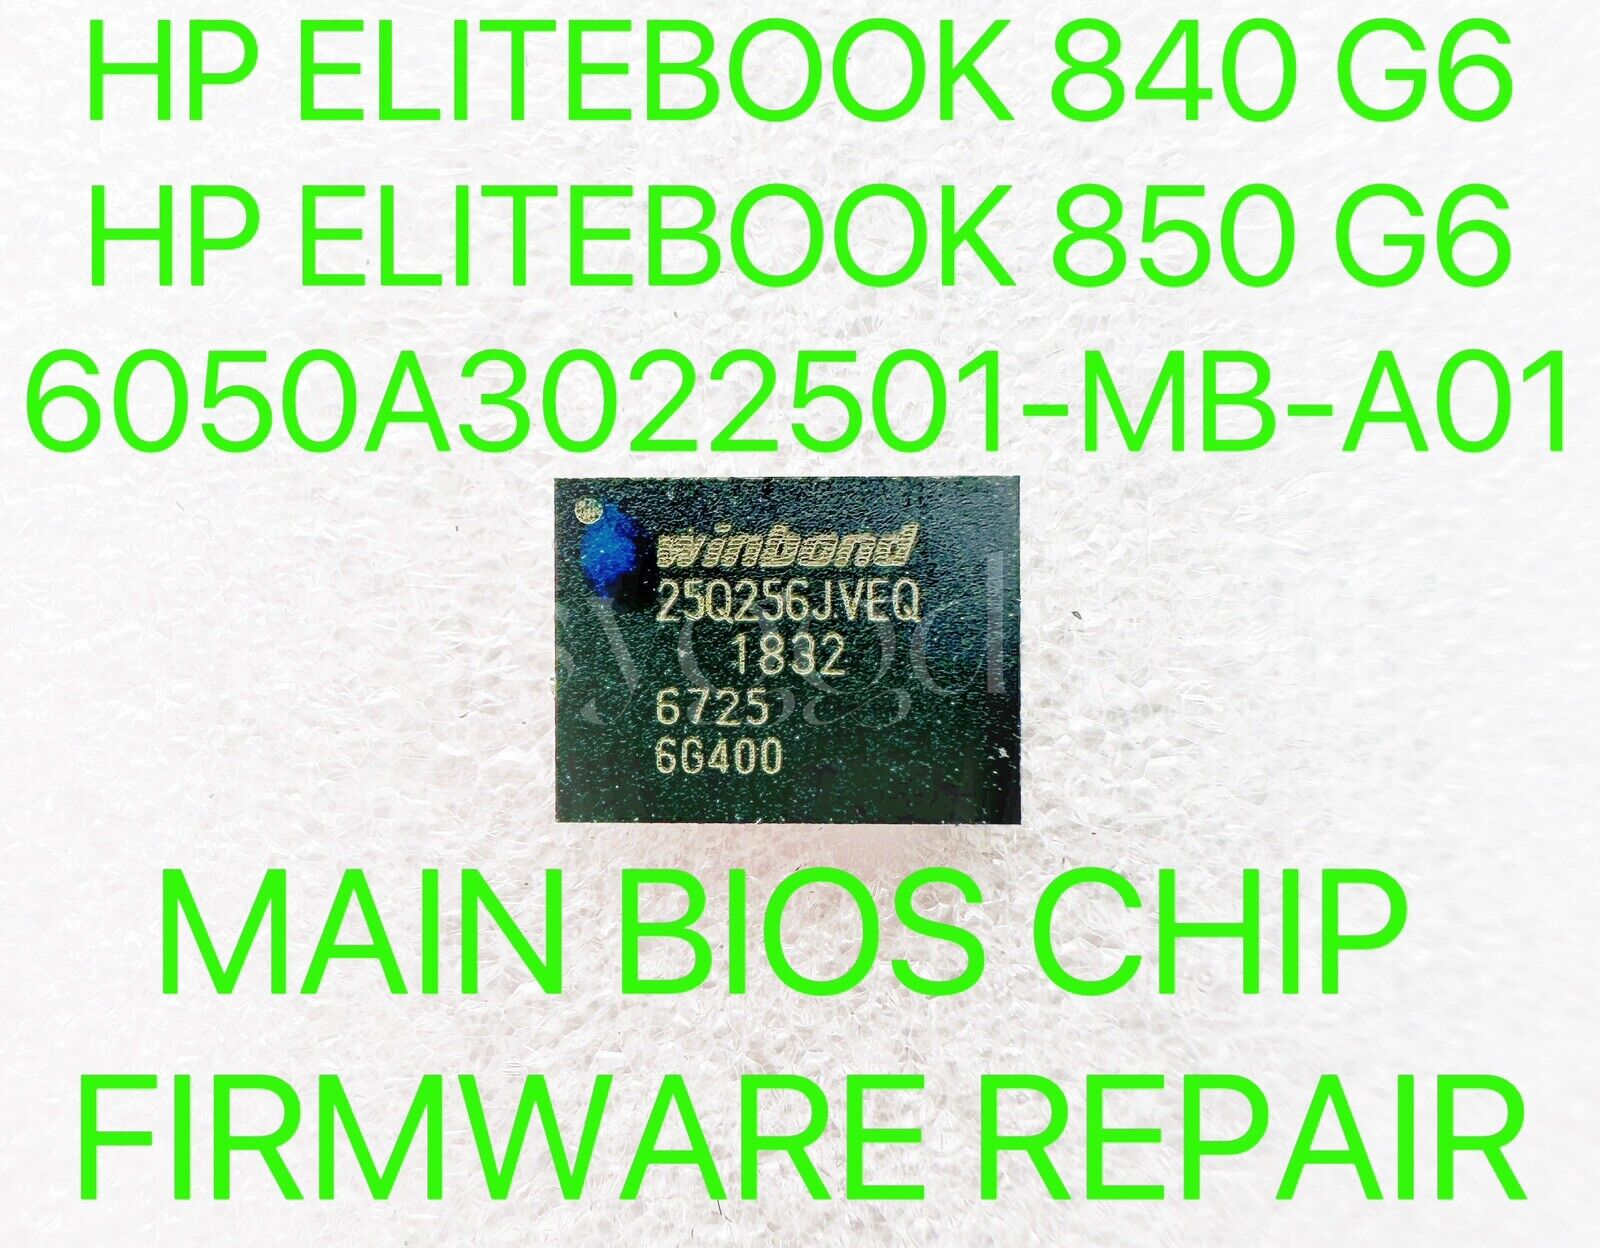 HP ELITEBOOK 840 G6, 850 G6, MAIN BIOS CHIP FIRMWARE REPAIR 6050A3022501-MB-A01